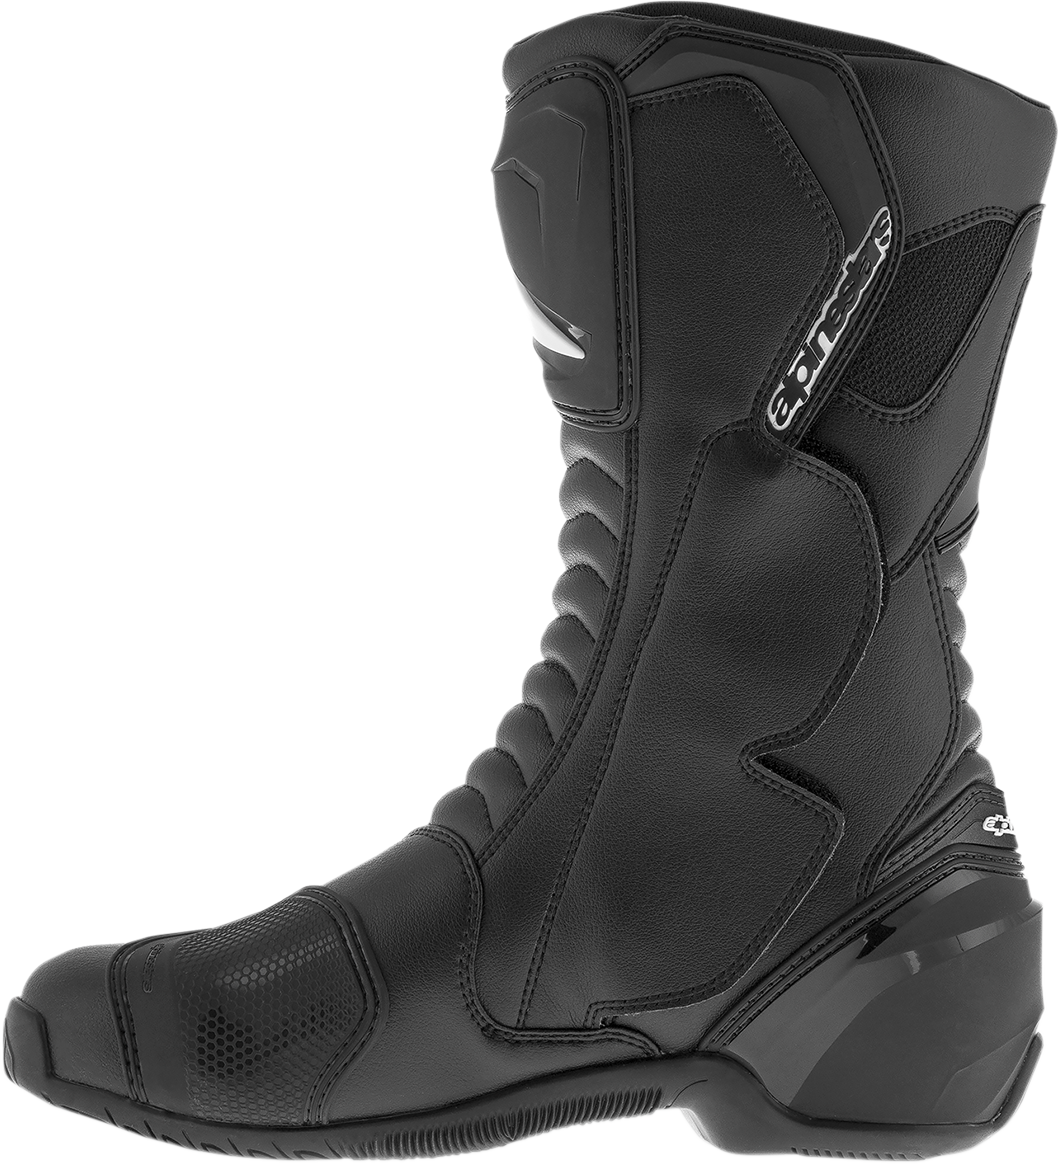 ALPINESTARS SMX-S Boots - Black - US 14 / EU 50 224351710050